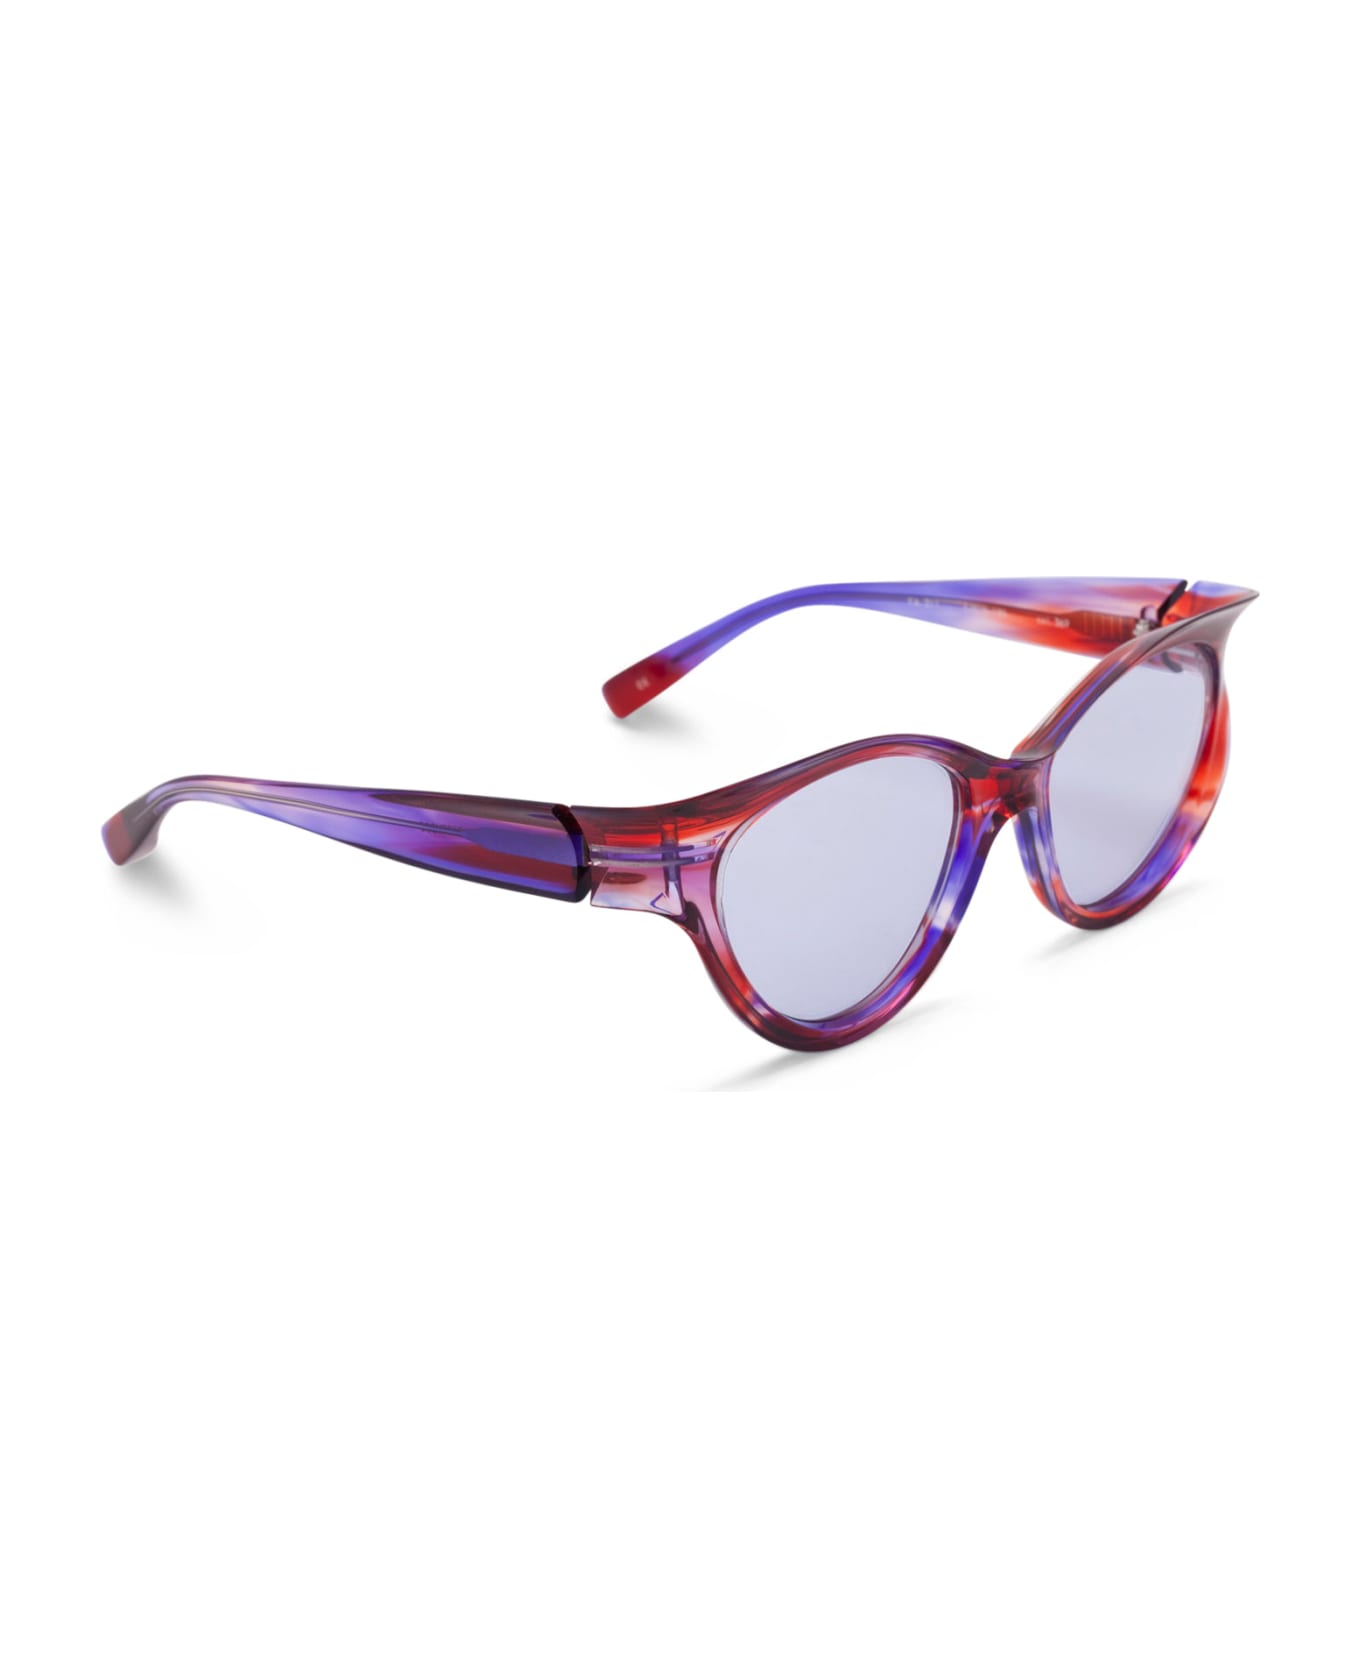 FACTORY900 Fa 311-369 Sunglasses - mottled red/purple